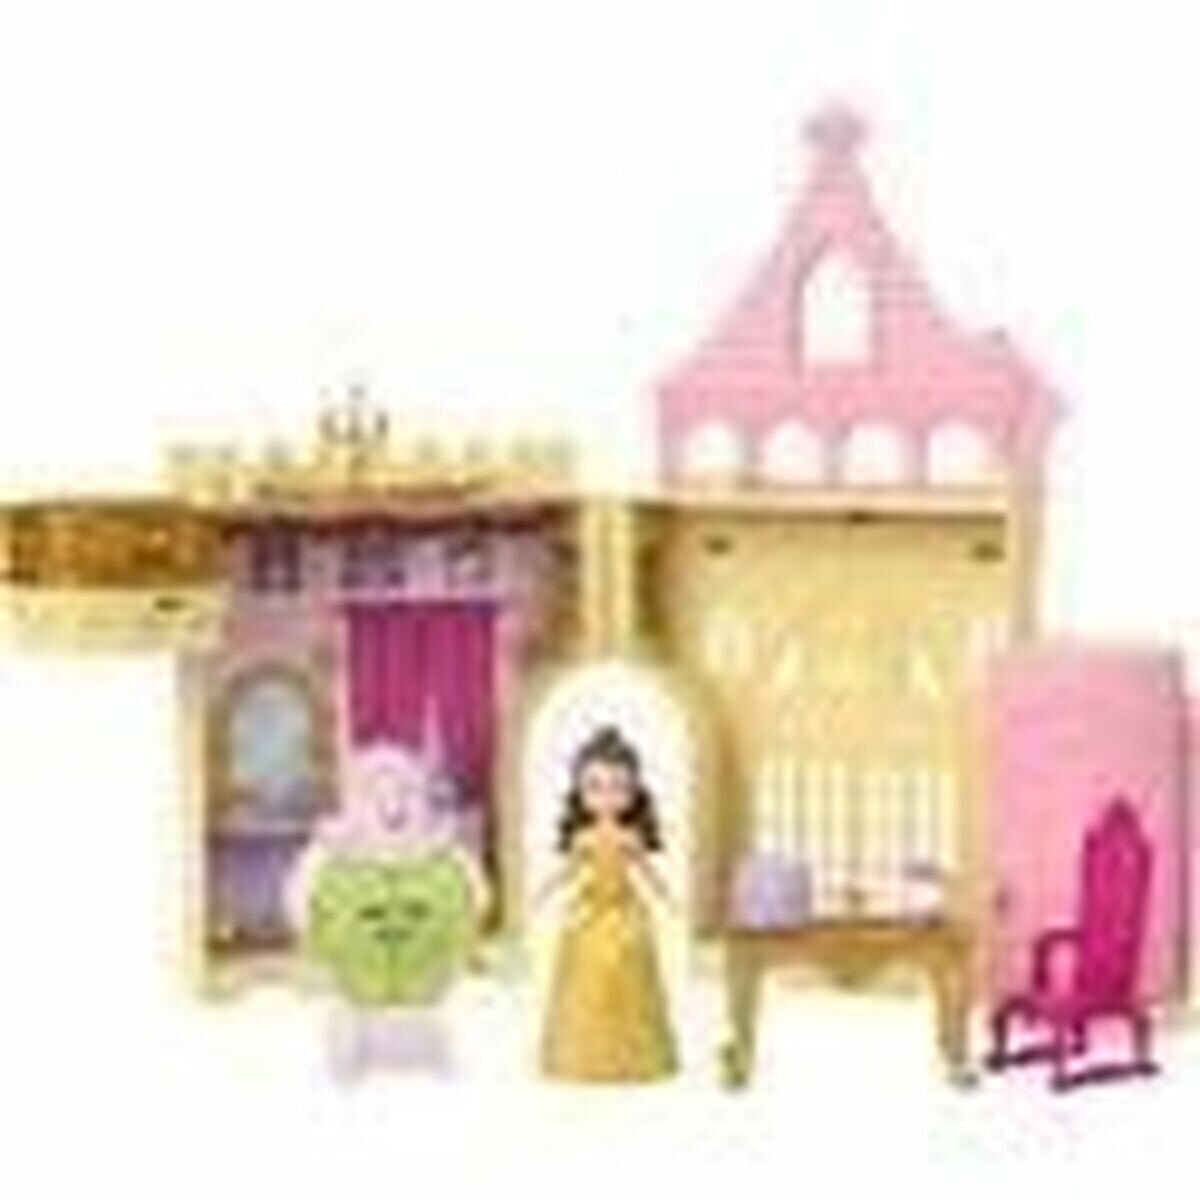 Doll's House Disney Princess Beauty and the Beast